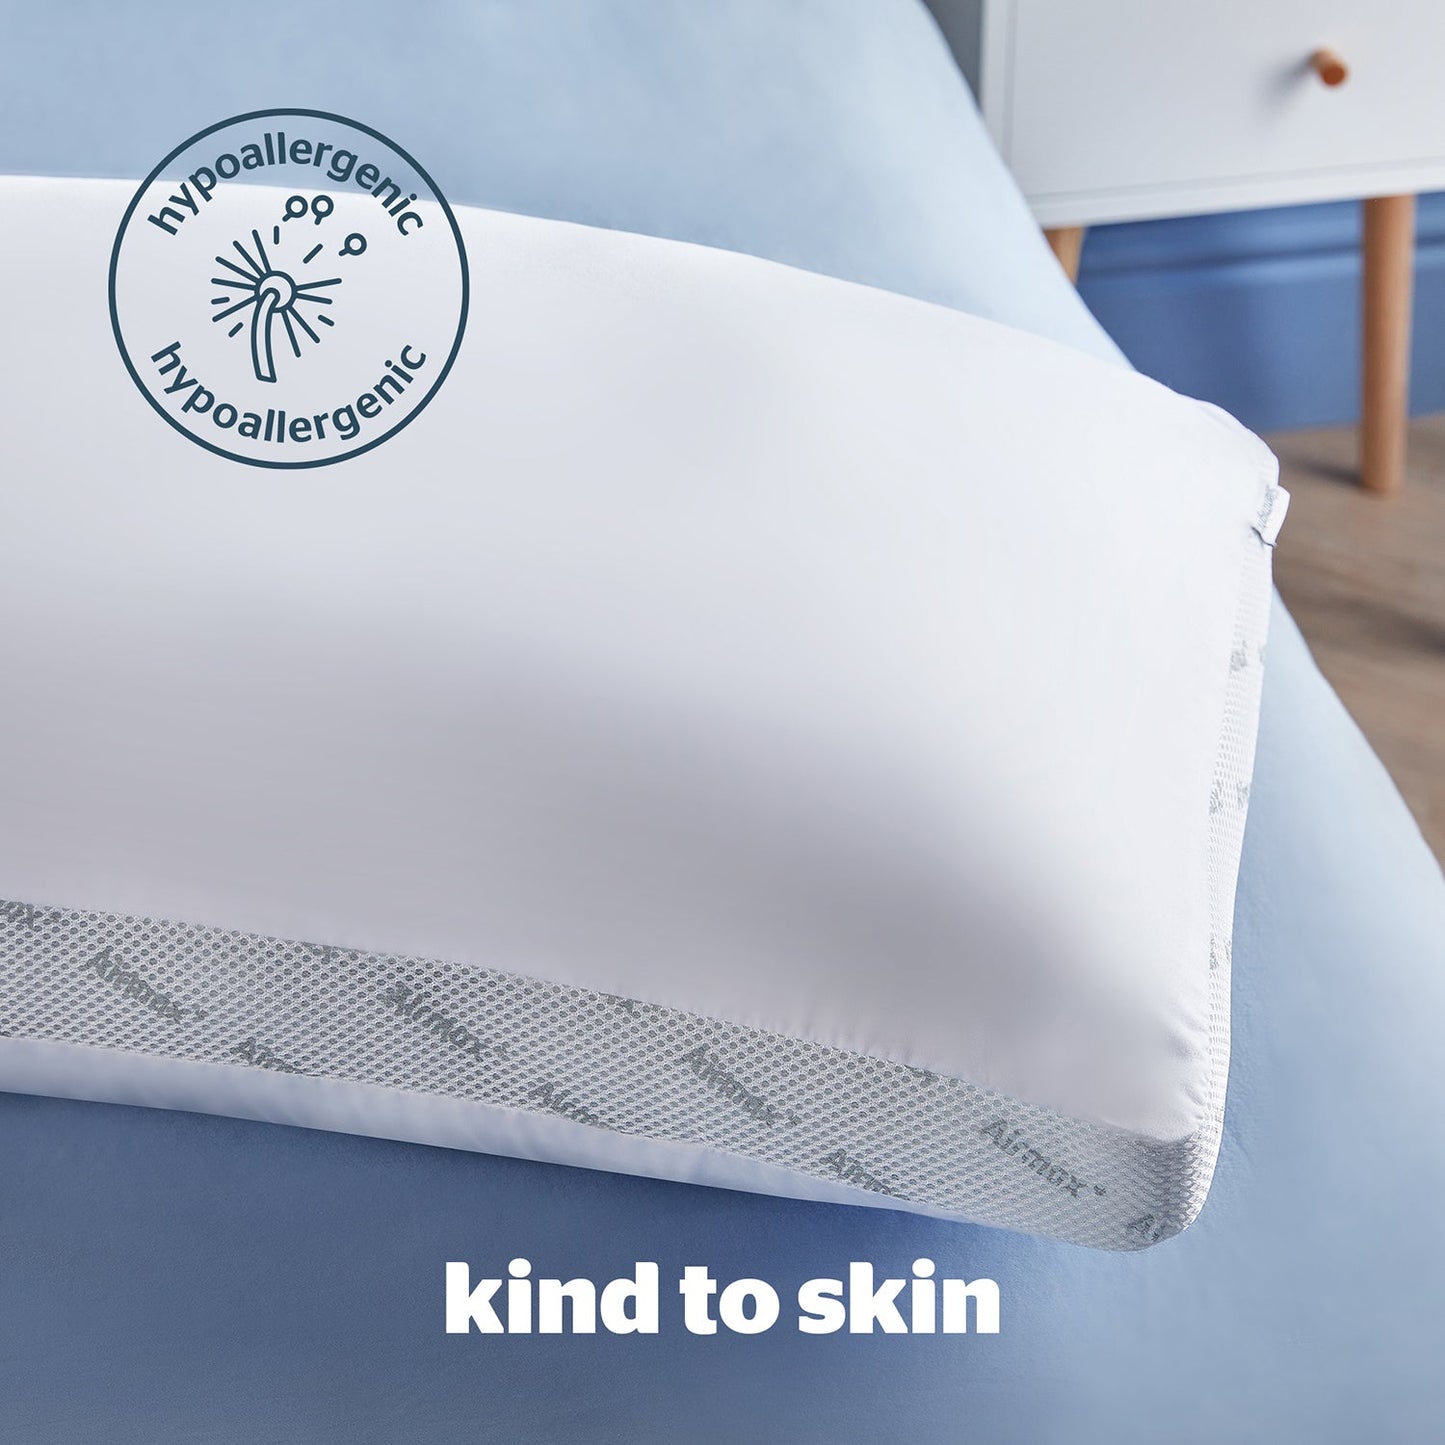 Silentnight Airmax Pillow - Medium Support